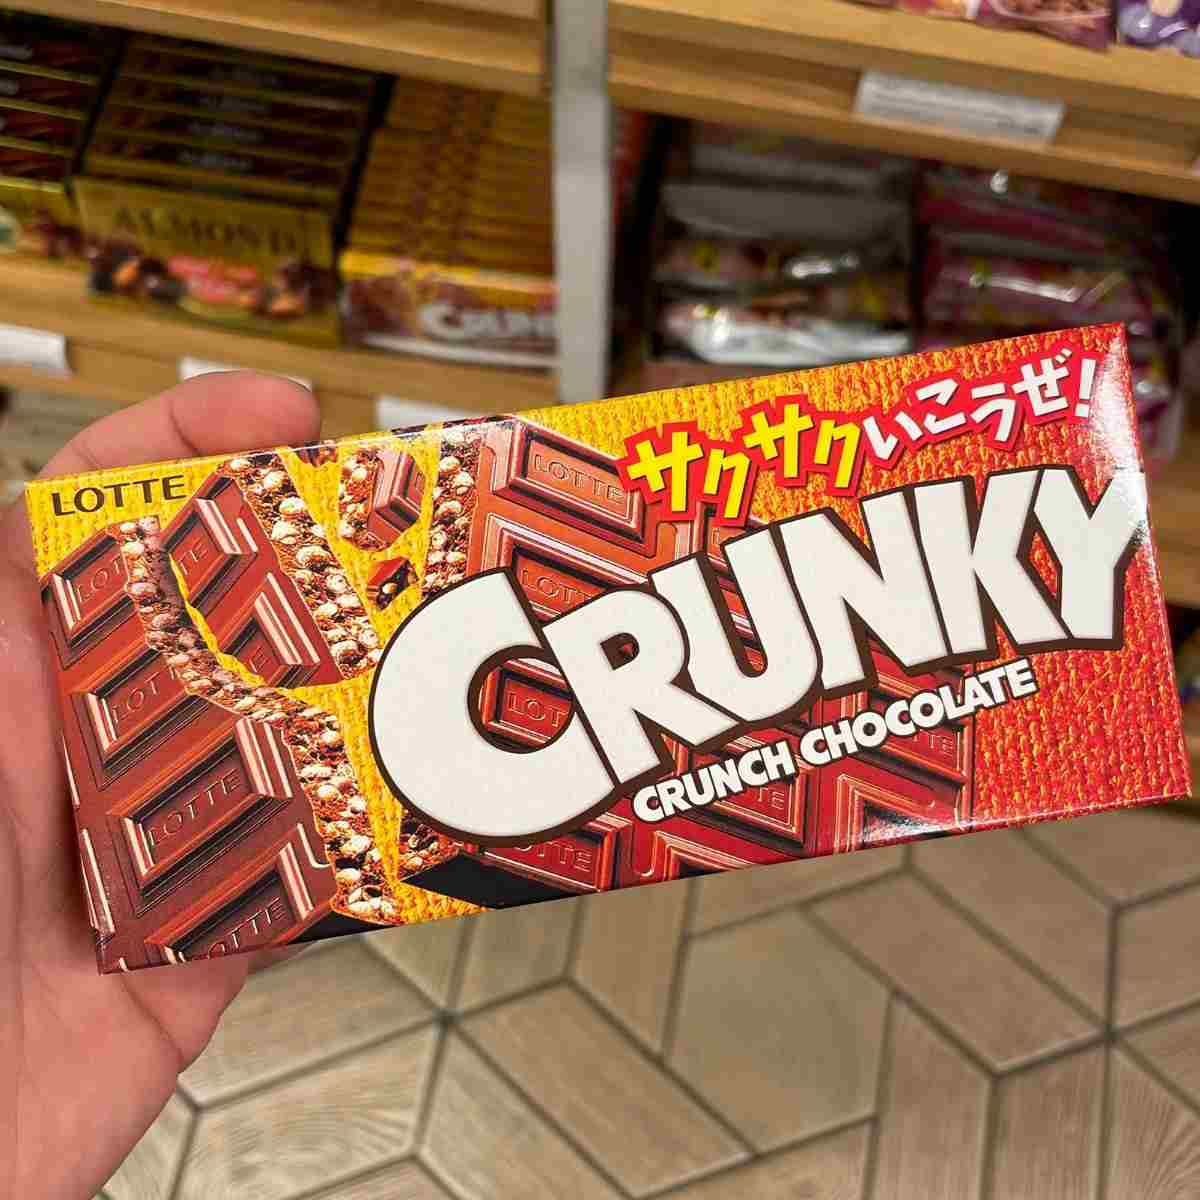 Lotte crunky chocolate bar